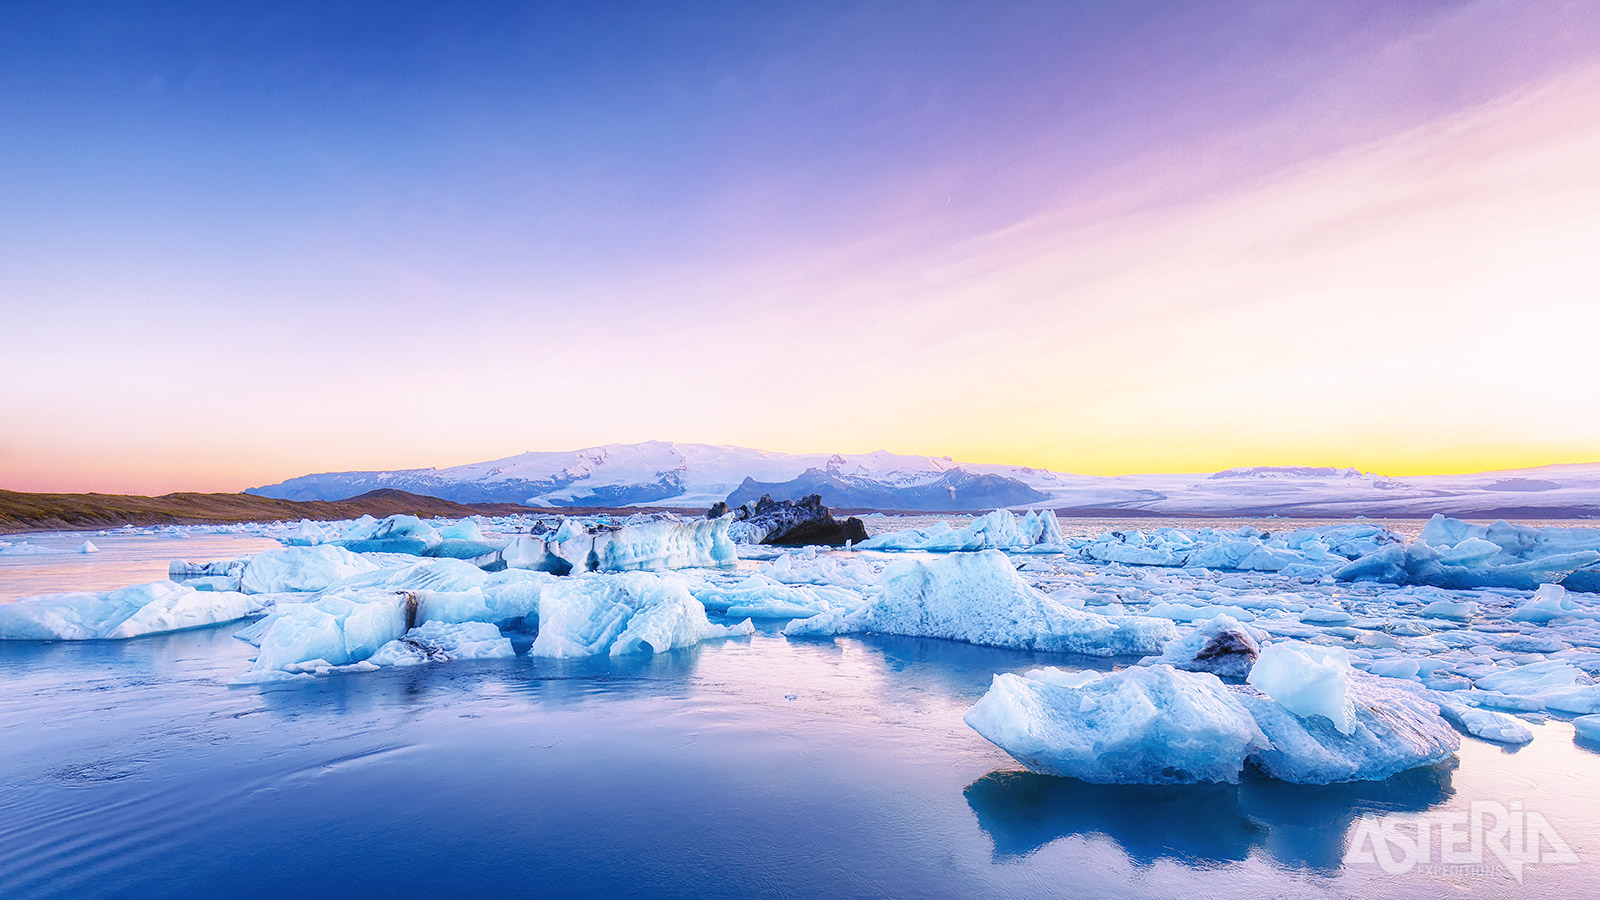 Het Jökulsárlón gletsjermeer is volgens velen de mooiste plek op IJsland